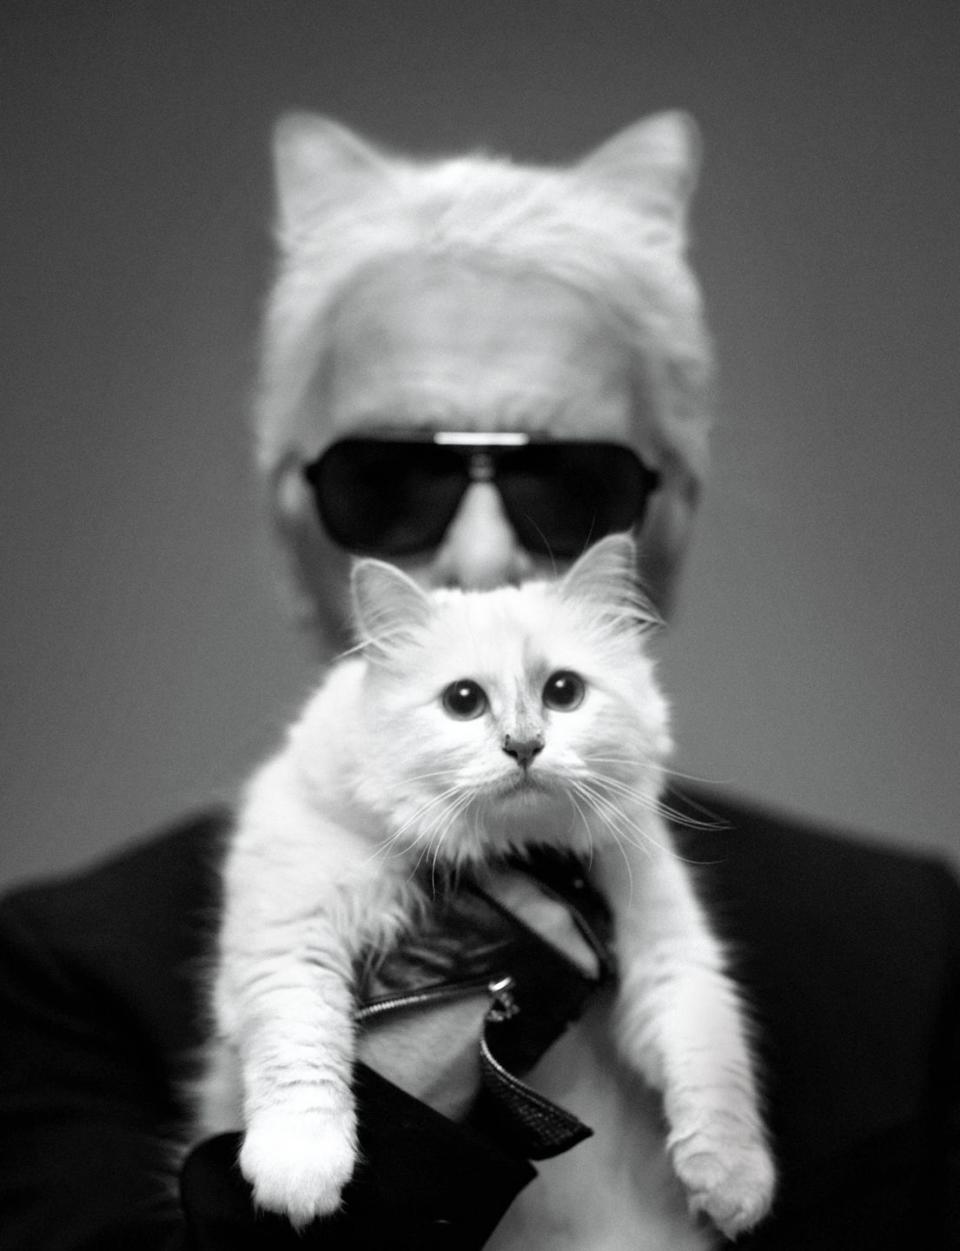 Photo credit: Karl Lagerfeld for Harper's BAZAAR